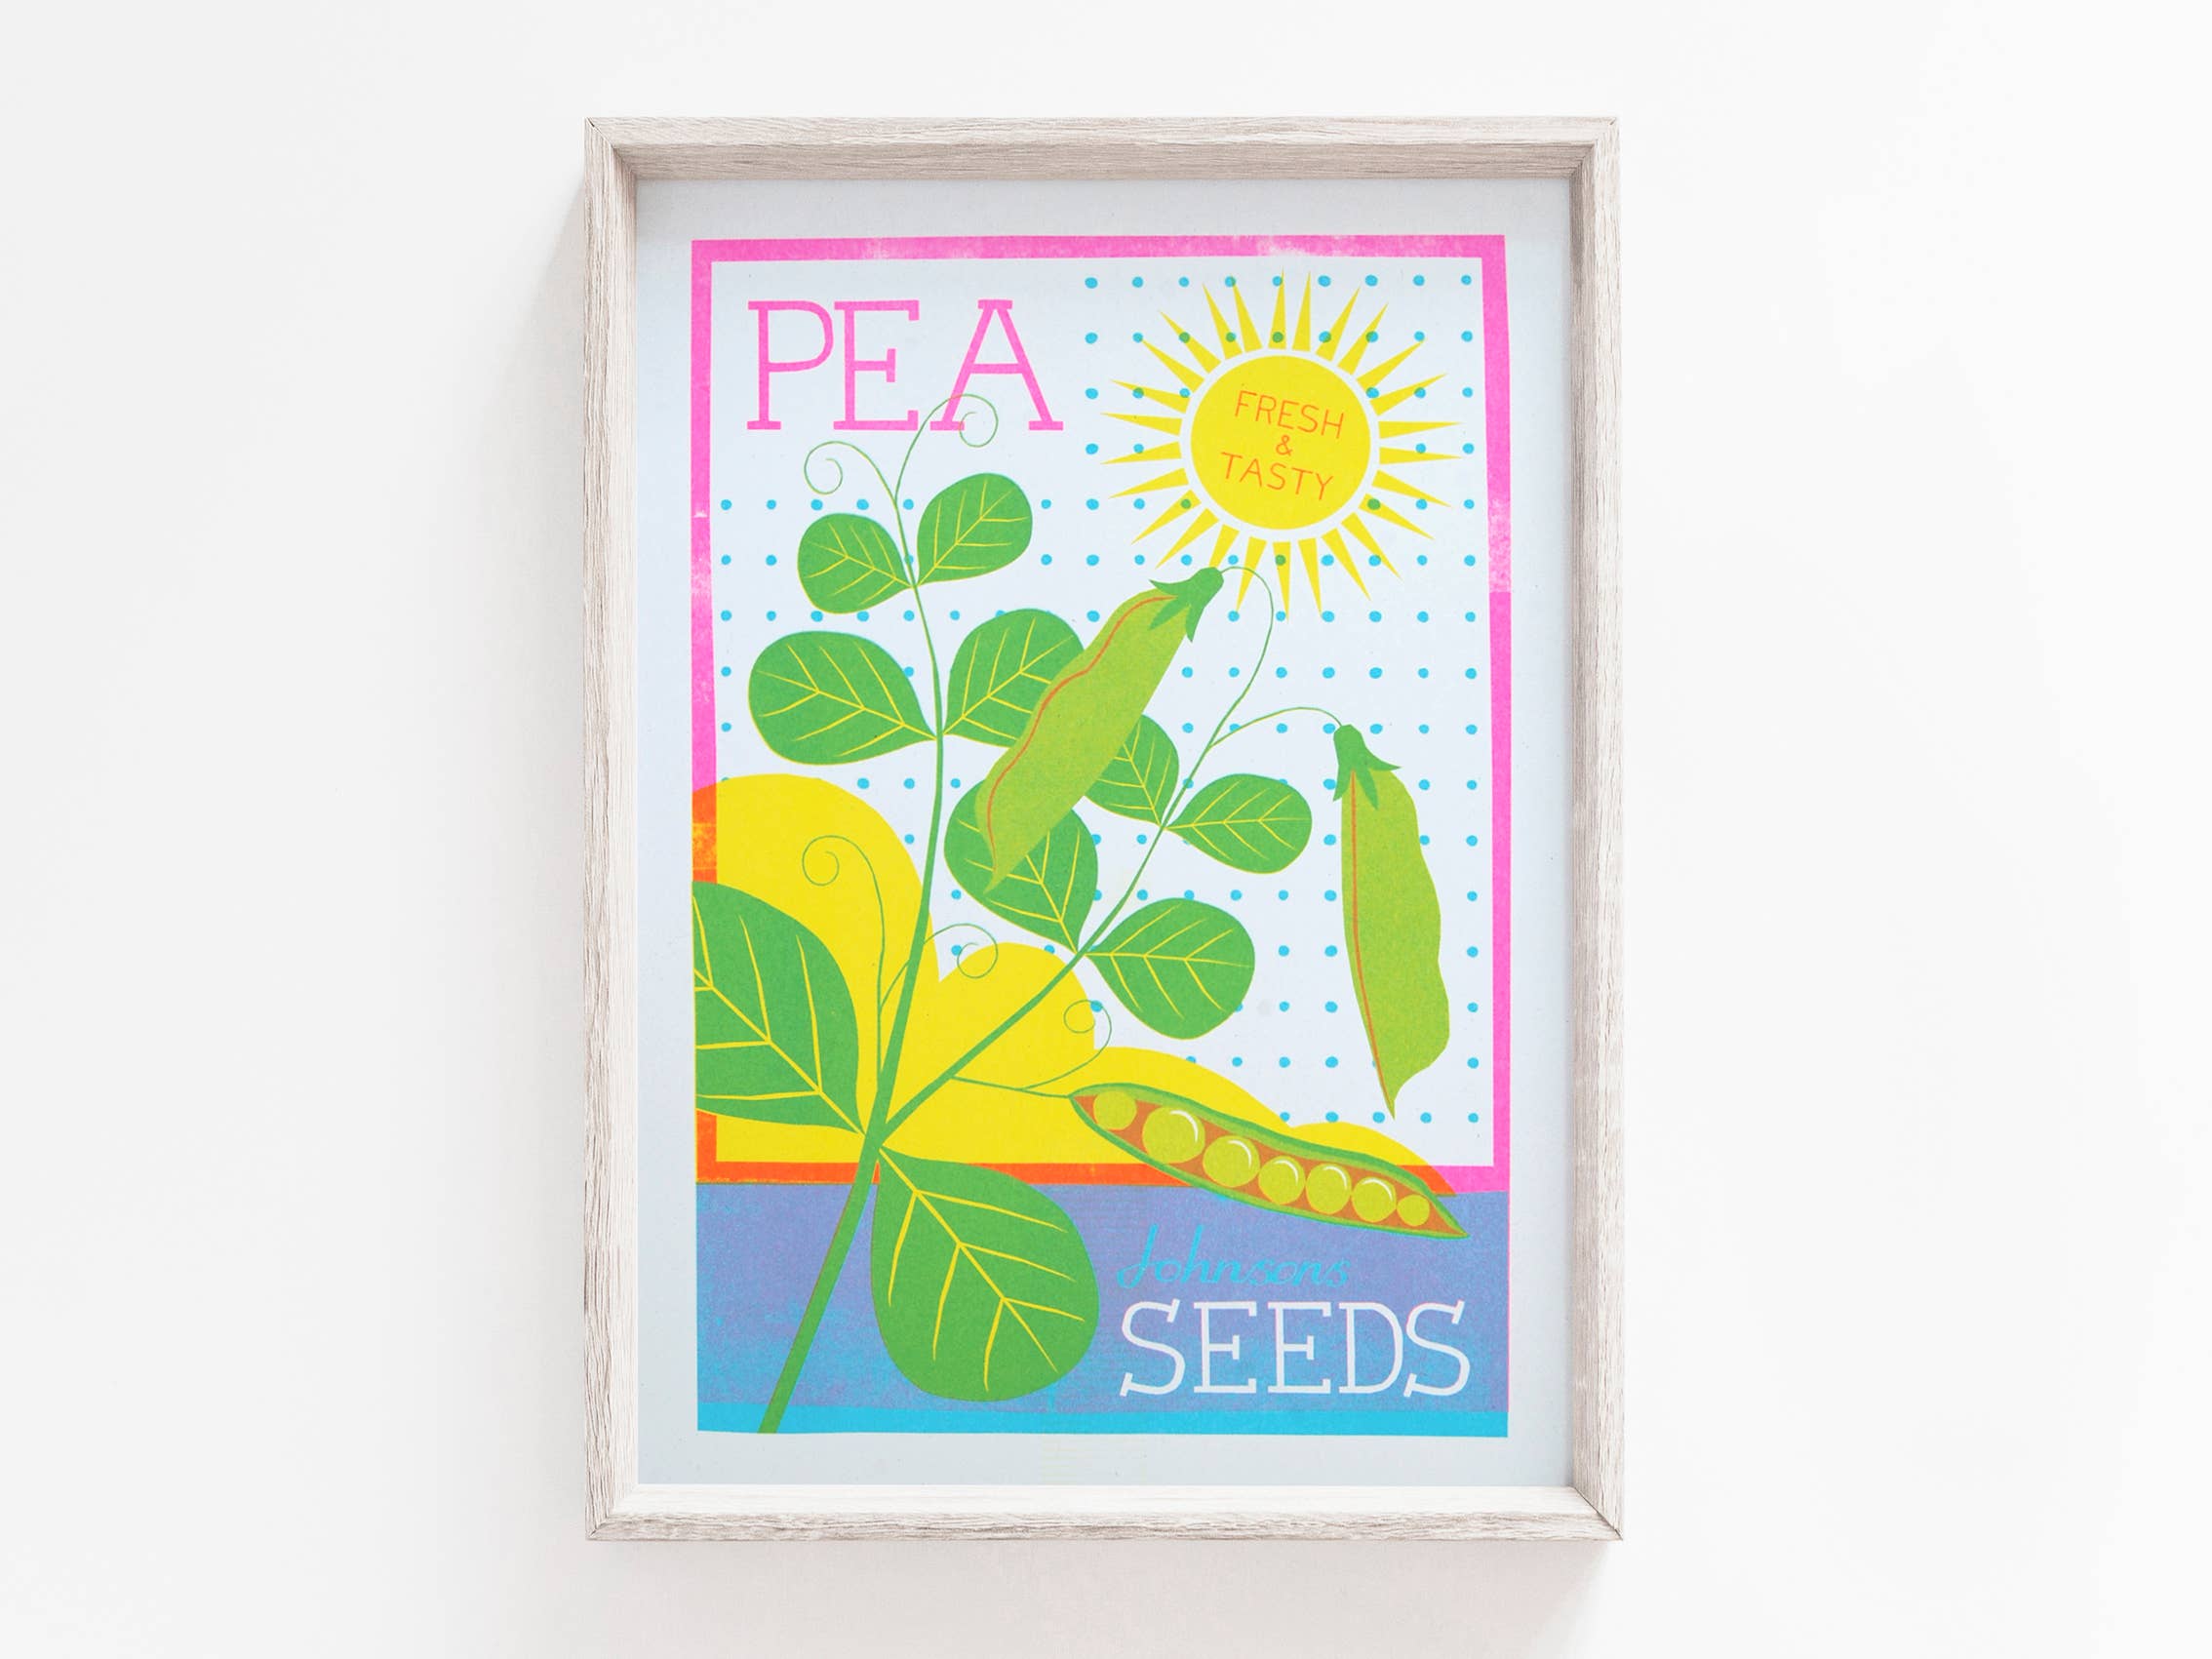 Printer Johnson Pea Seeds - Risograph Print A4 Framed Riso Print